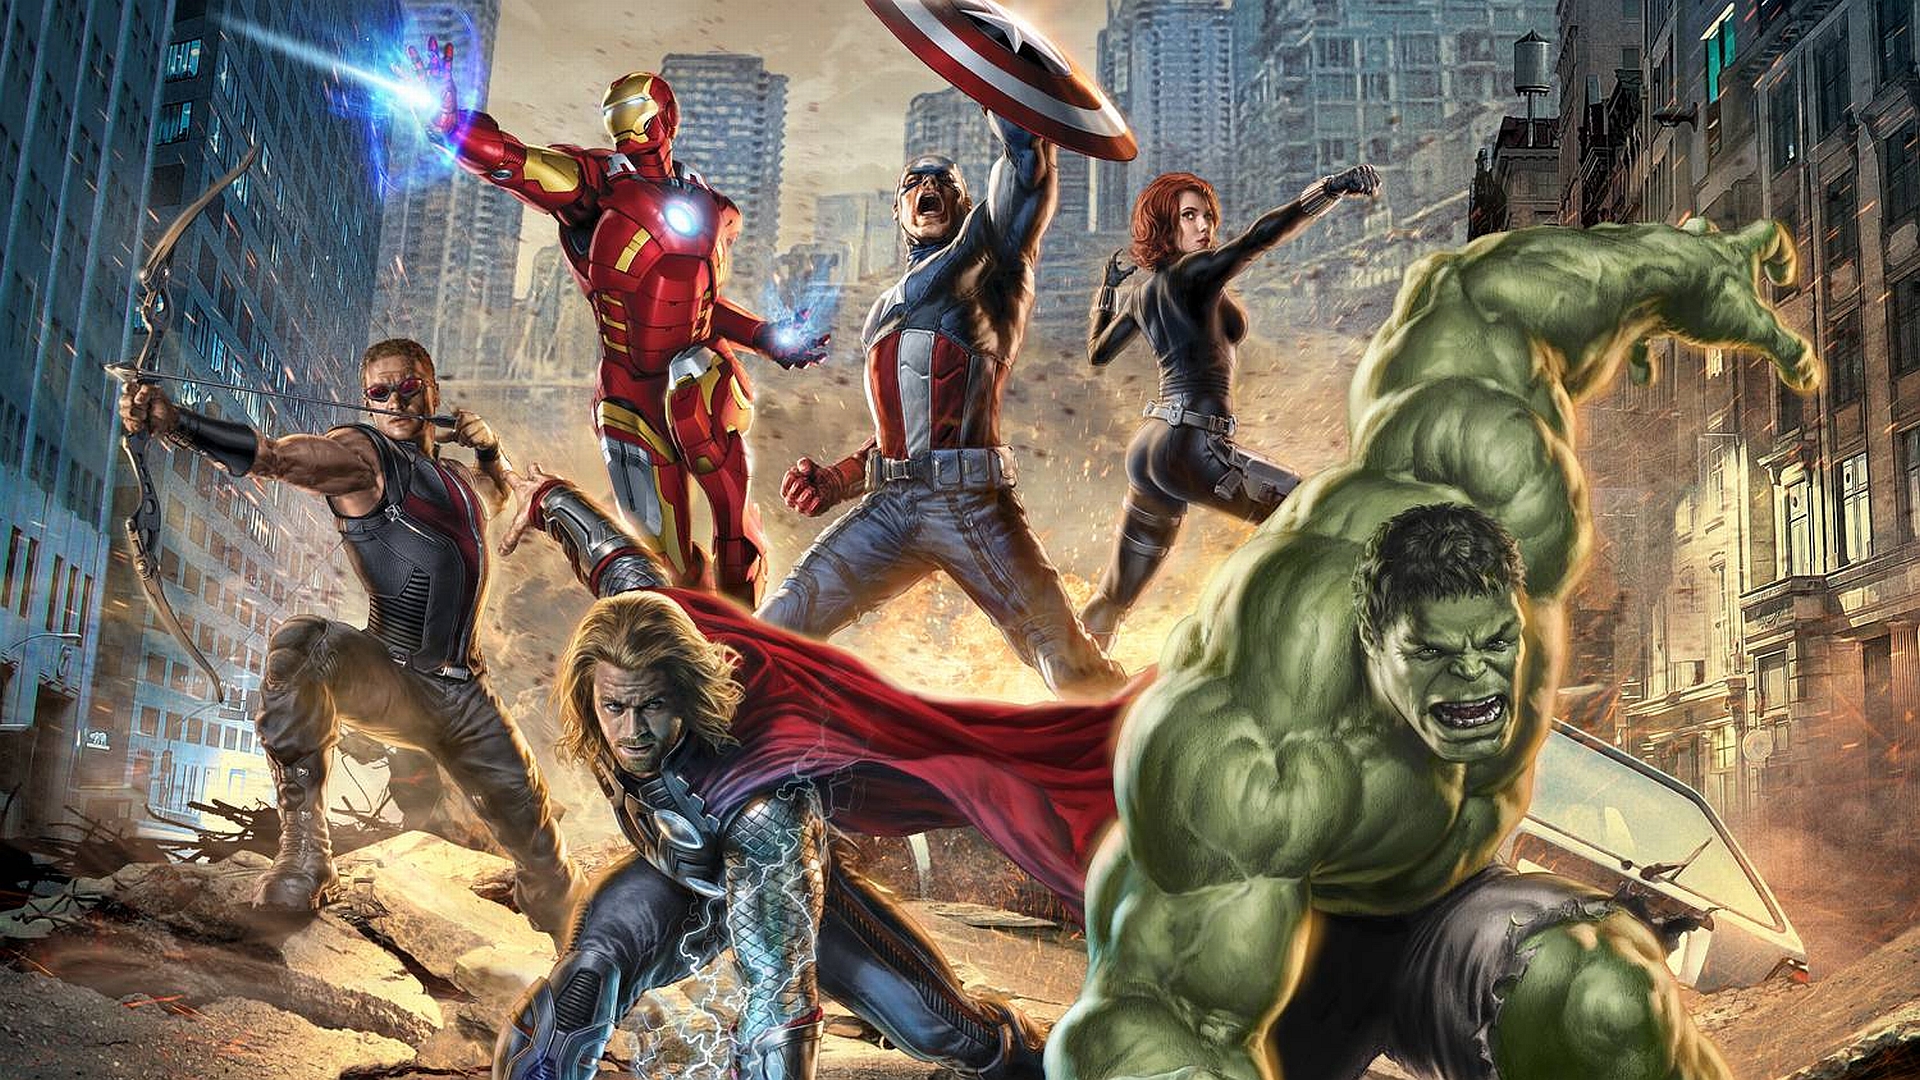 The mighty Avengers stand united: Thor, Hawkeye, Iron Man, Hulk, Black Widow, and Captain America.